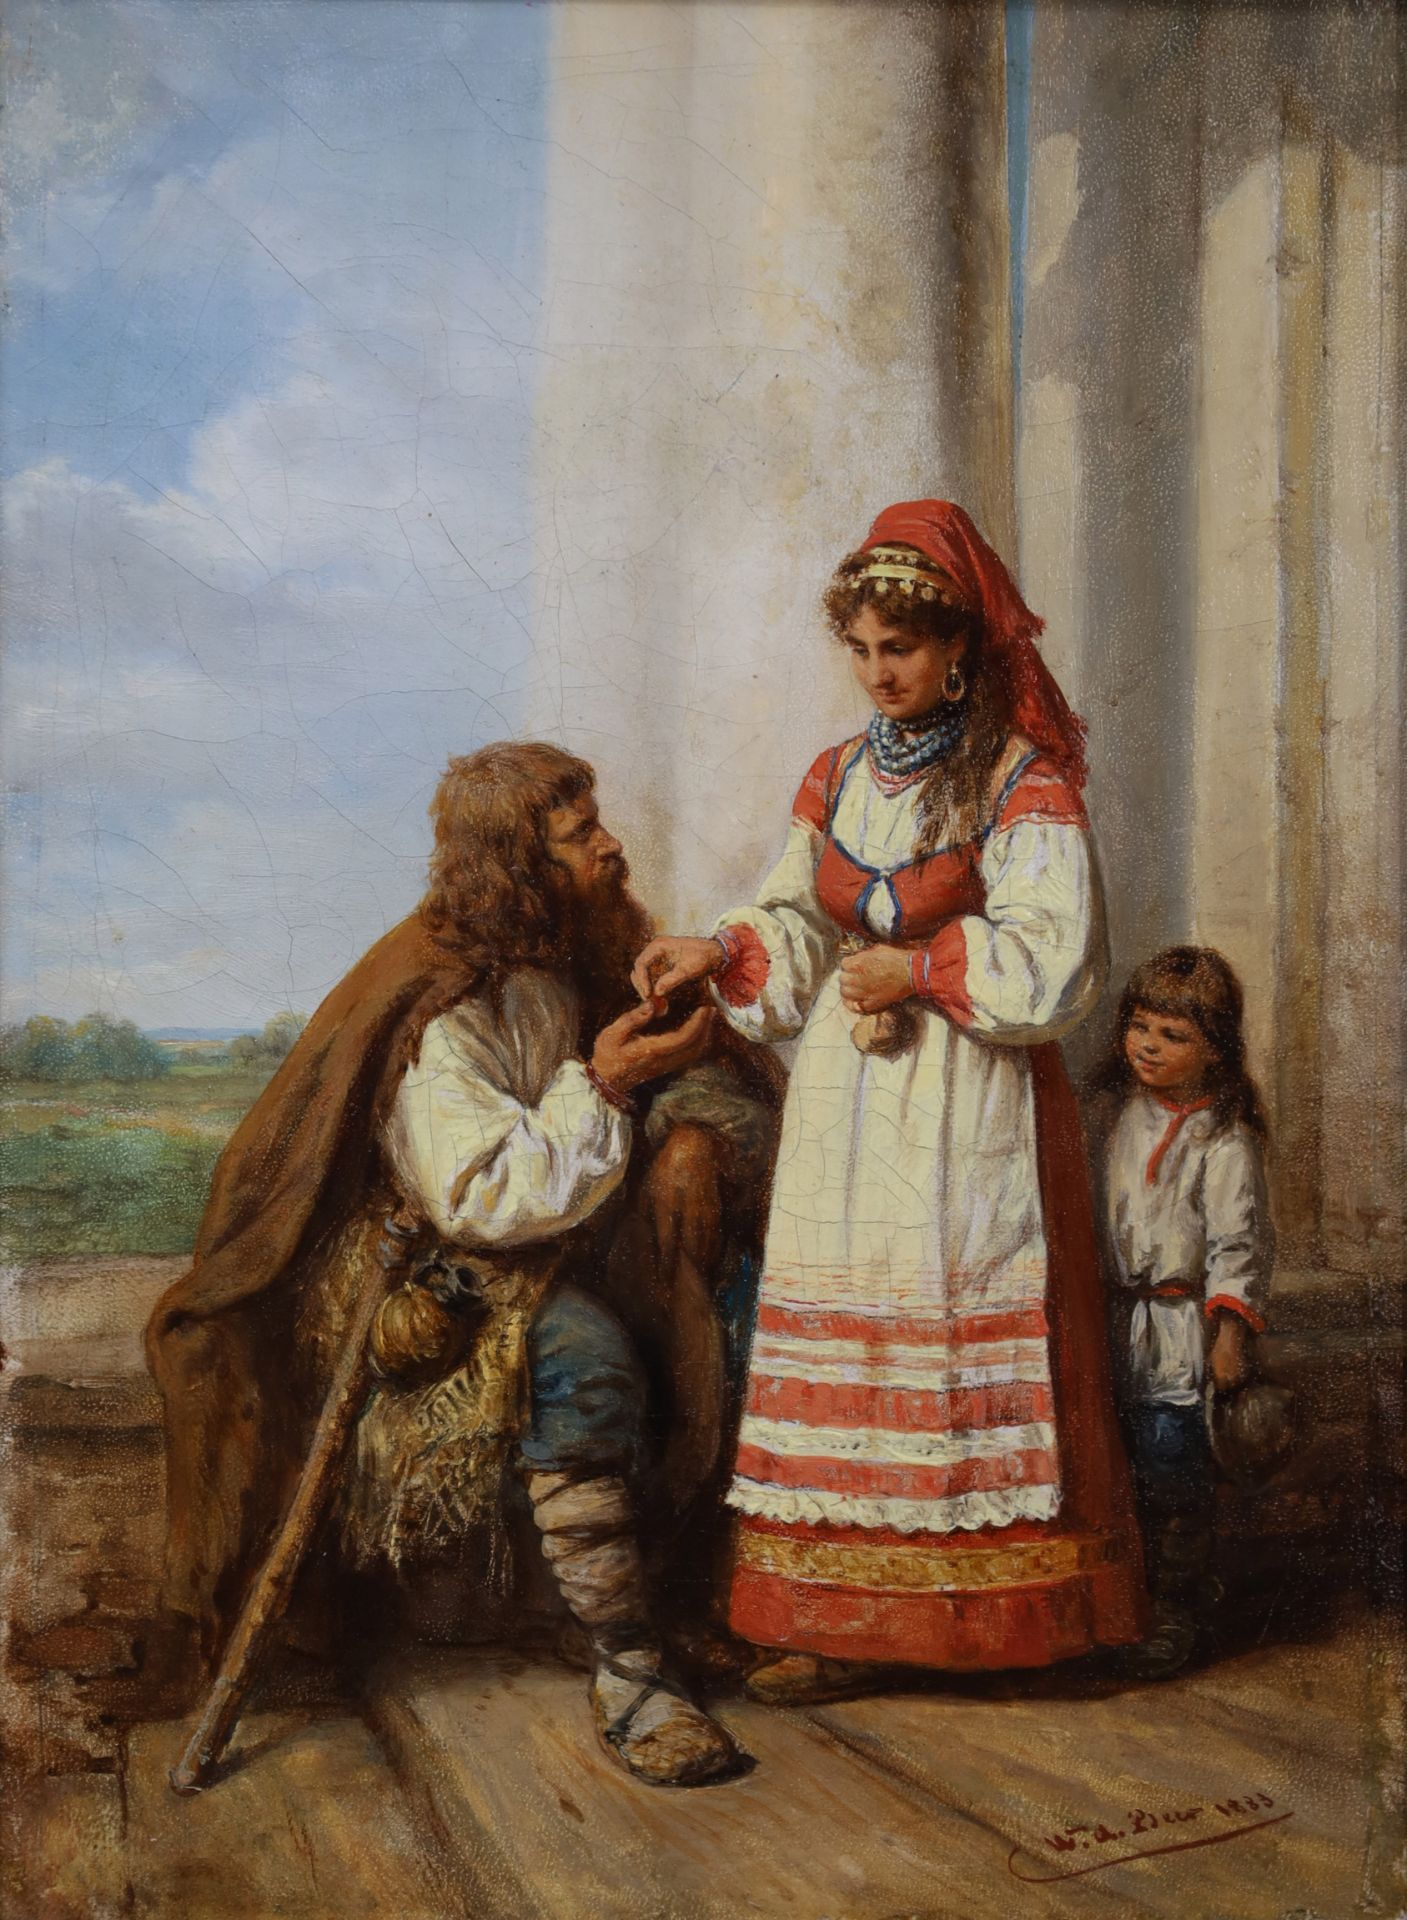 Wilhelm Amandus BEER (1837 - 1907). Alms to beggars. 1883.